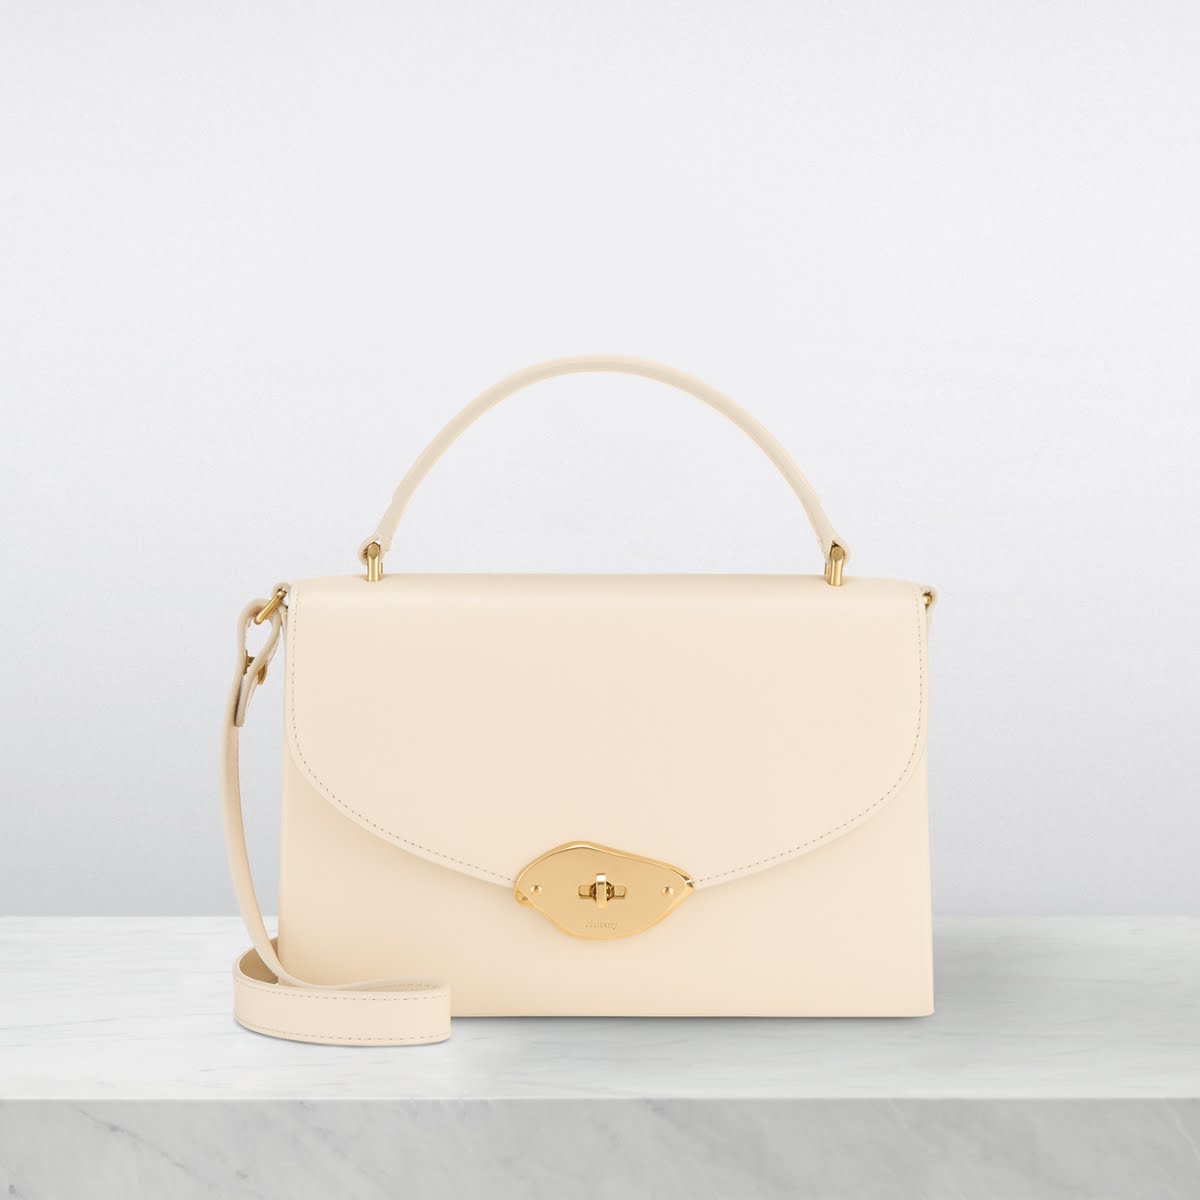 Mulberry Lana Top Handle Bag, €1,395